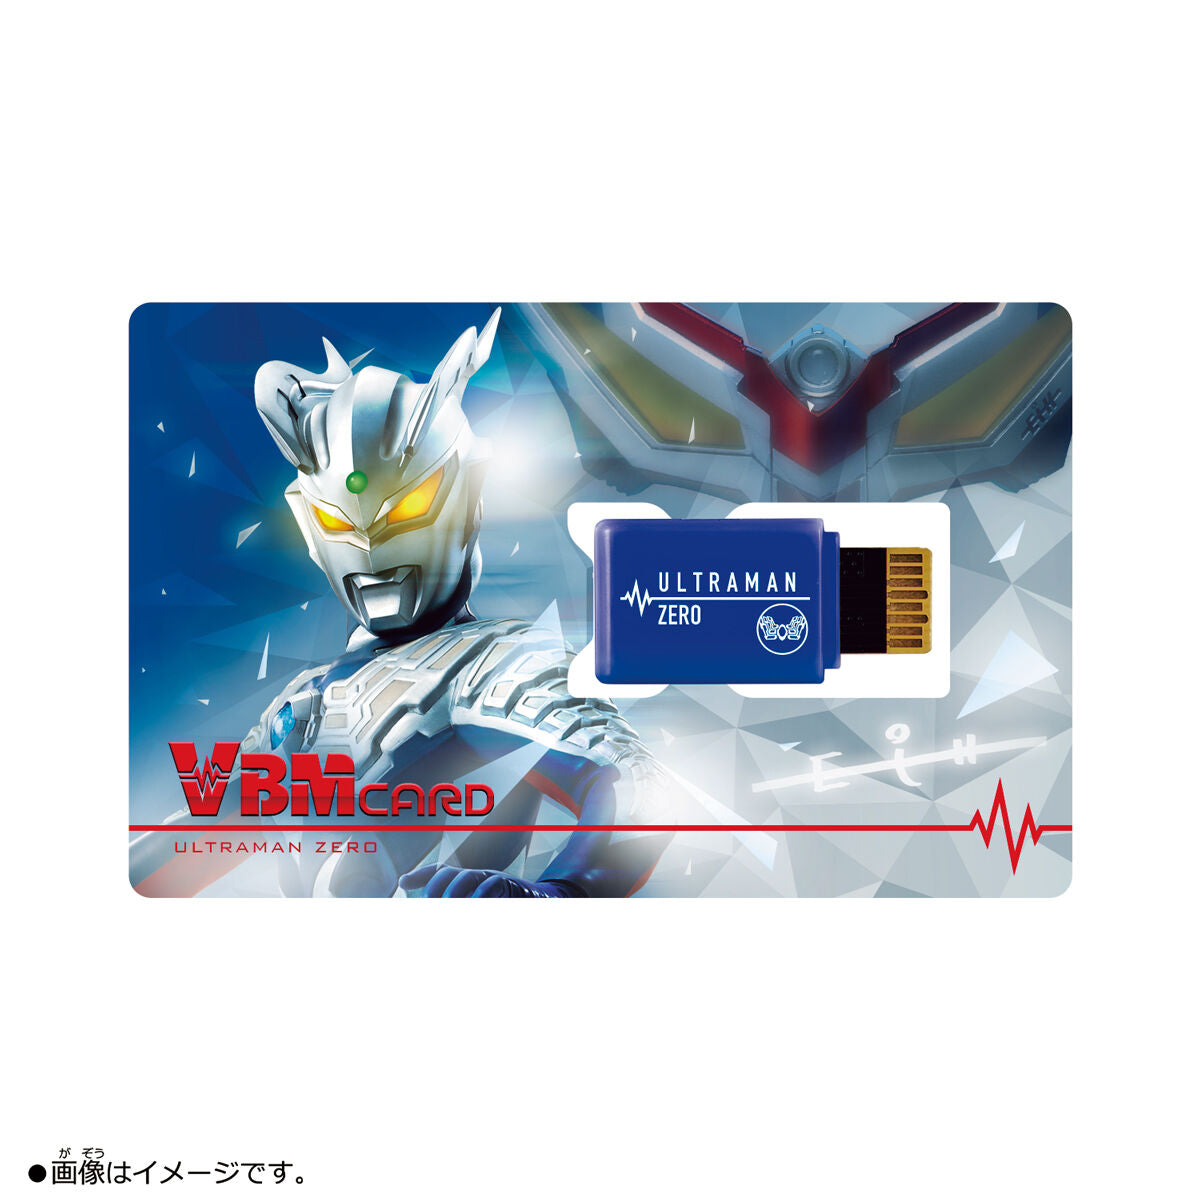 Ultraman VBM Card Set 01: Zero & Zetton